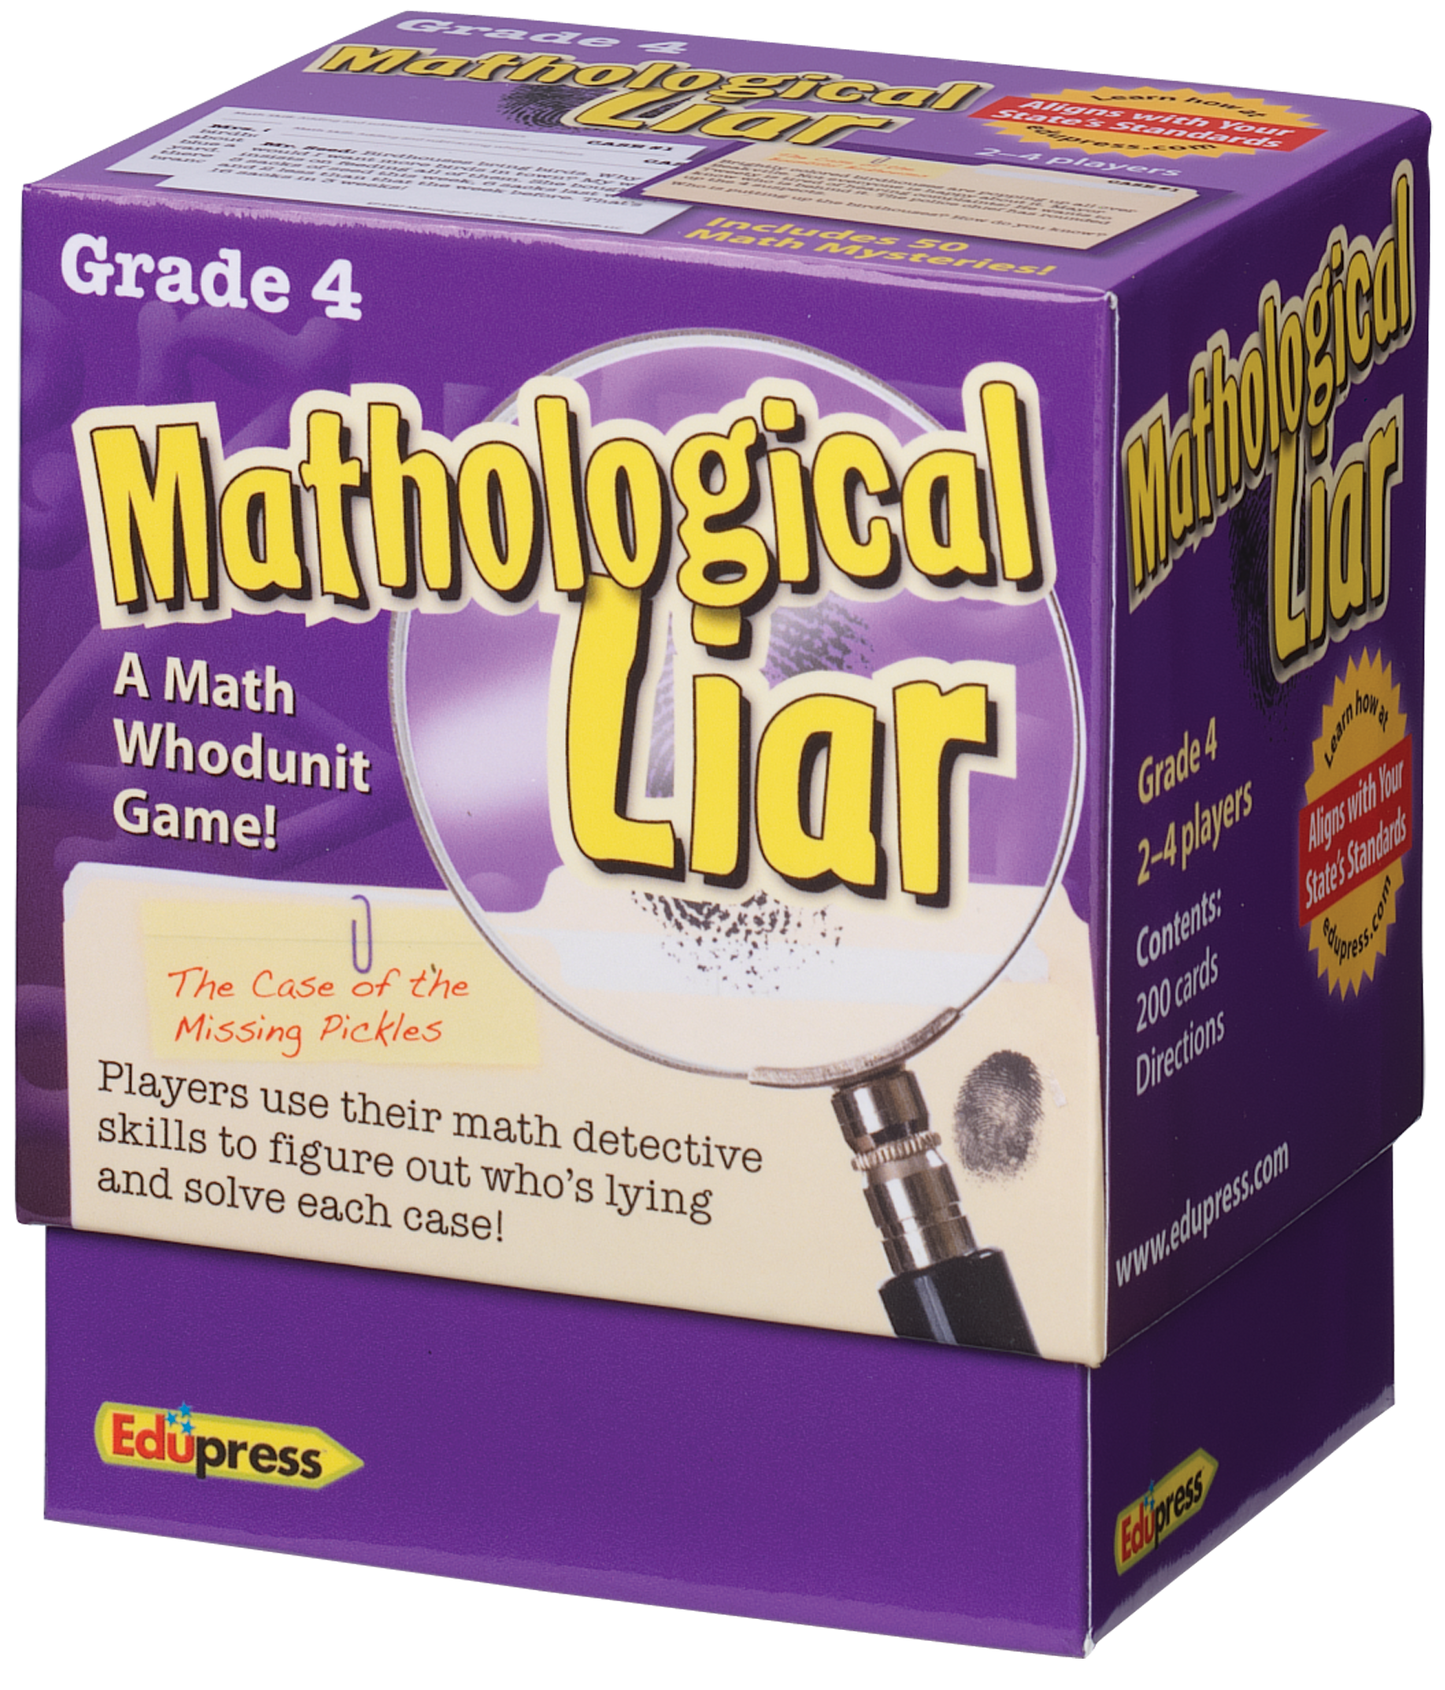 Mathological Liar Game (Gr. 4)